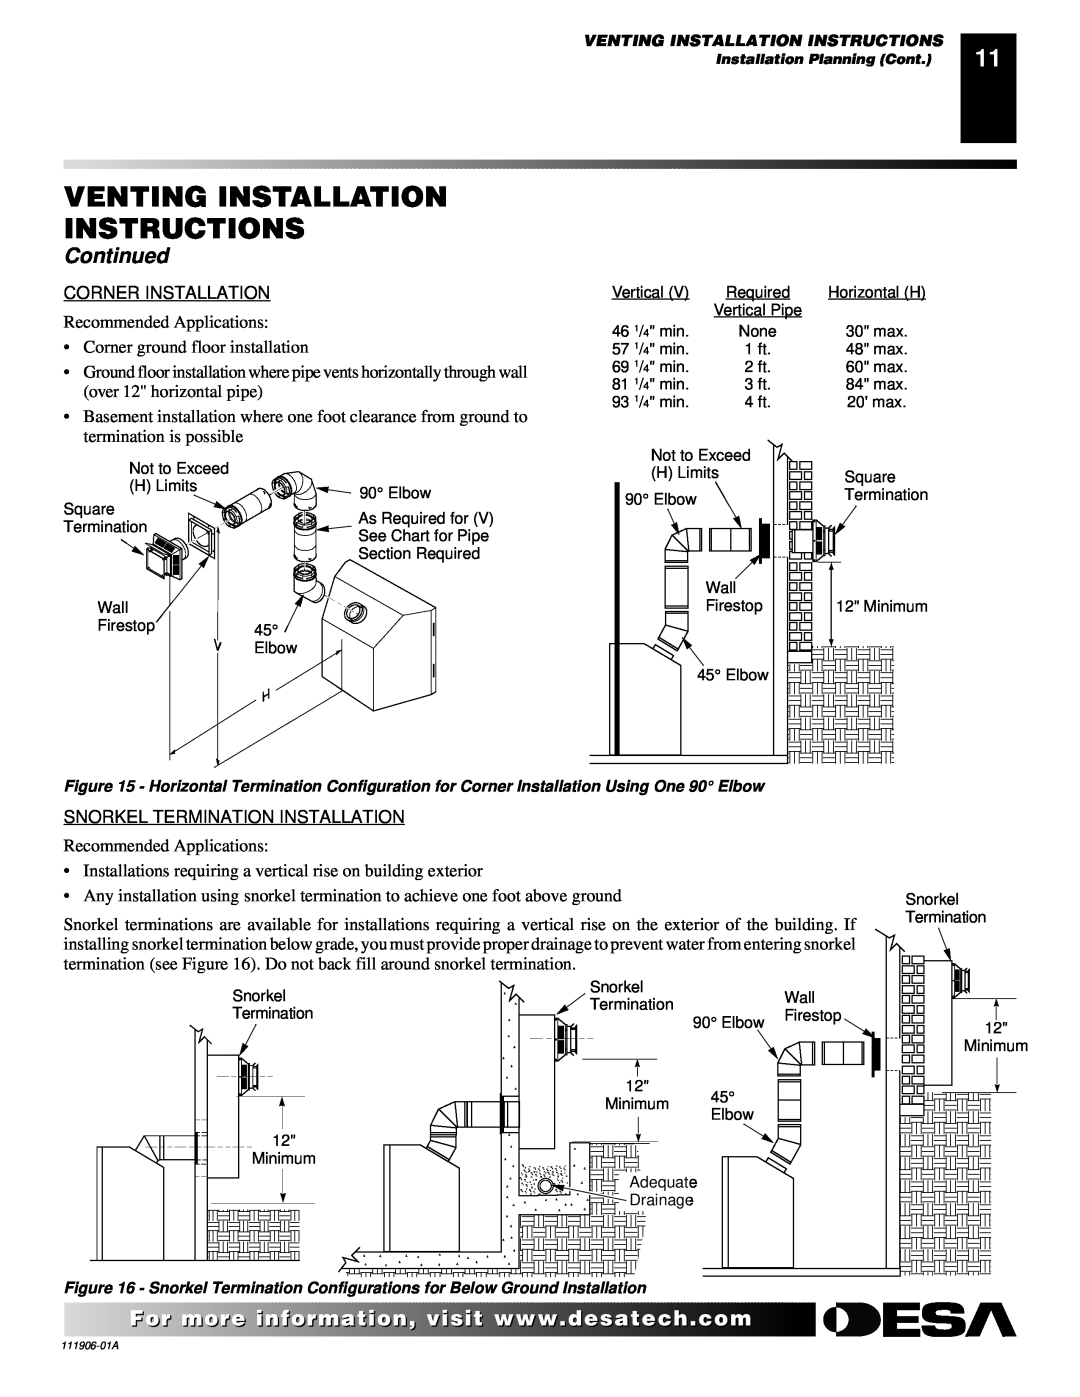 Desa (V)V42NA(1) installation manual Venting Installation Instructions, Continued, Recommended Applications 